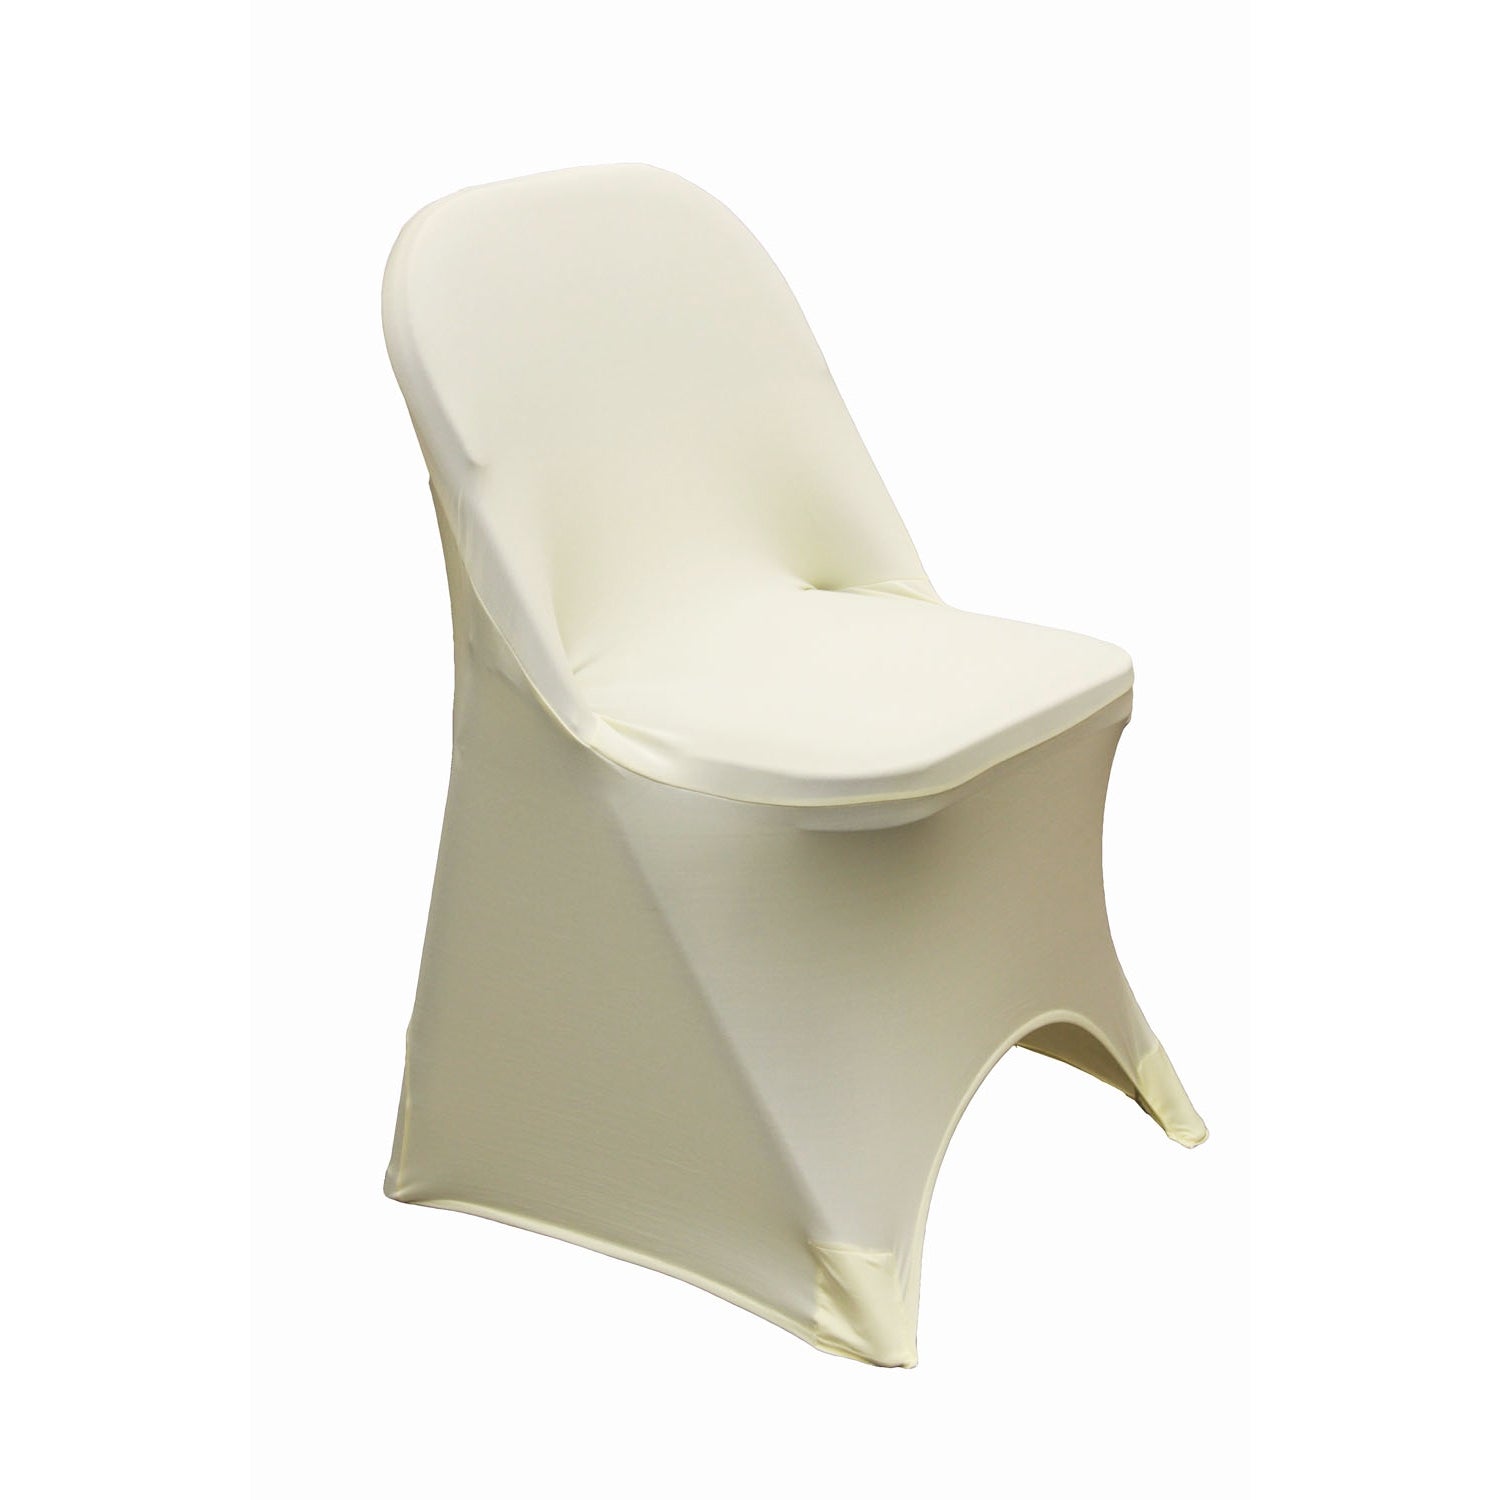 Stretch Spandex Lifetime Folding Chair Cover White 